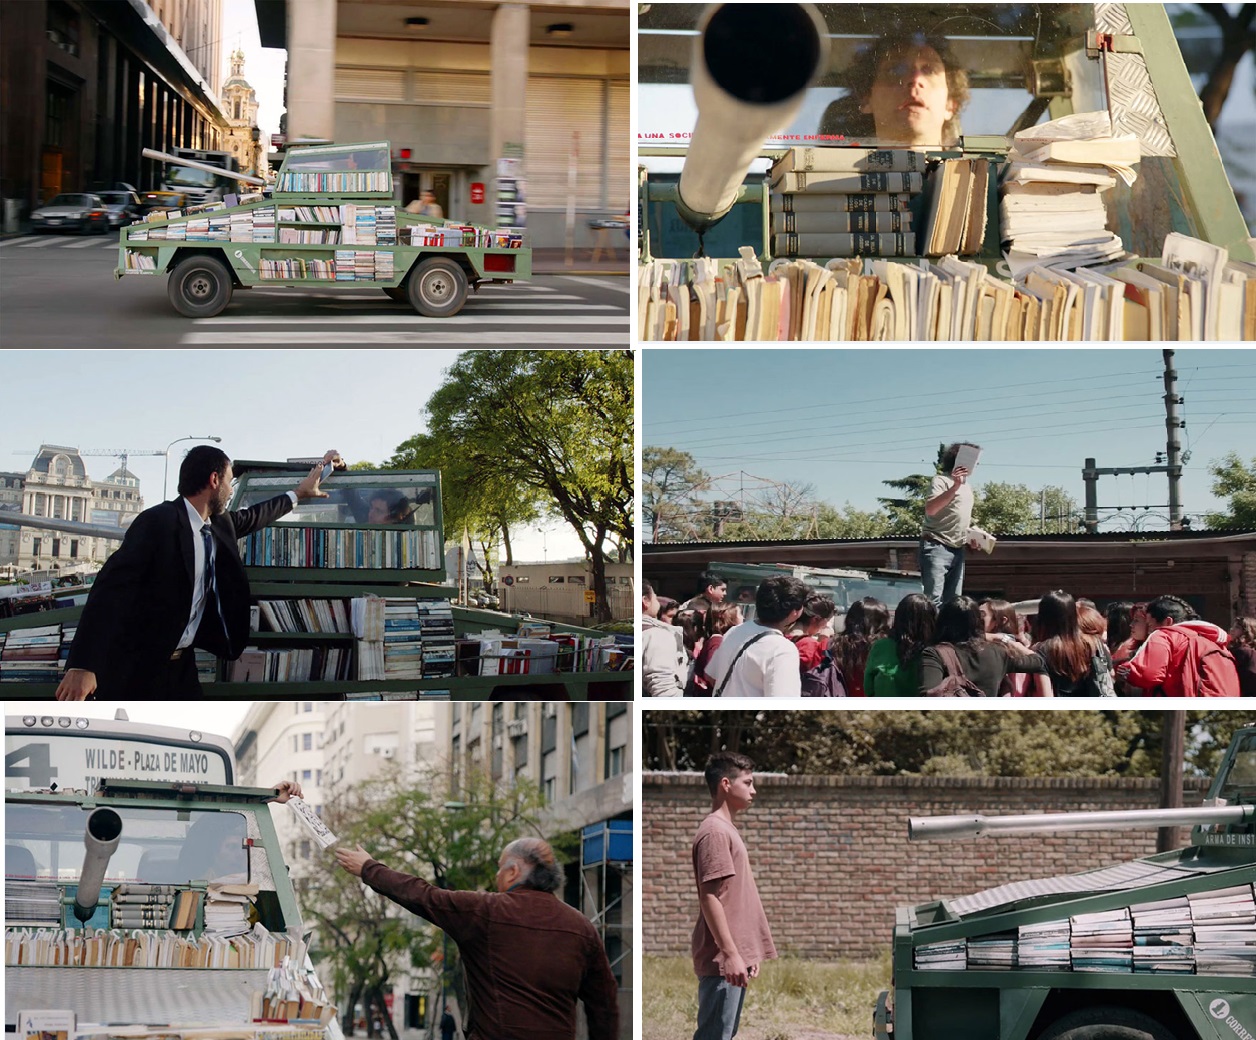 Un artista reparte libros en Argentina dentro de un tanque